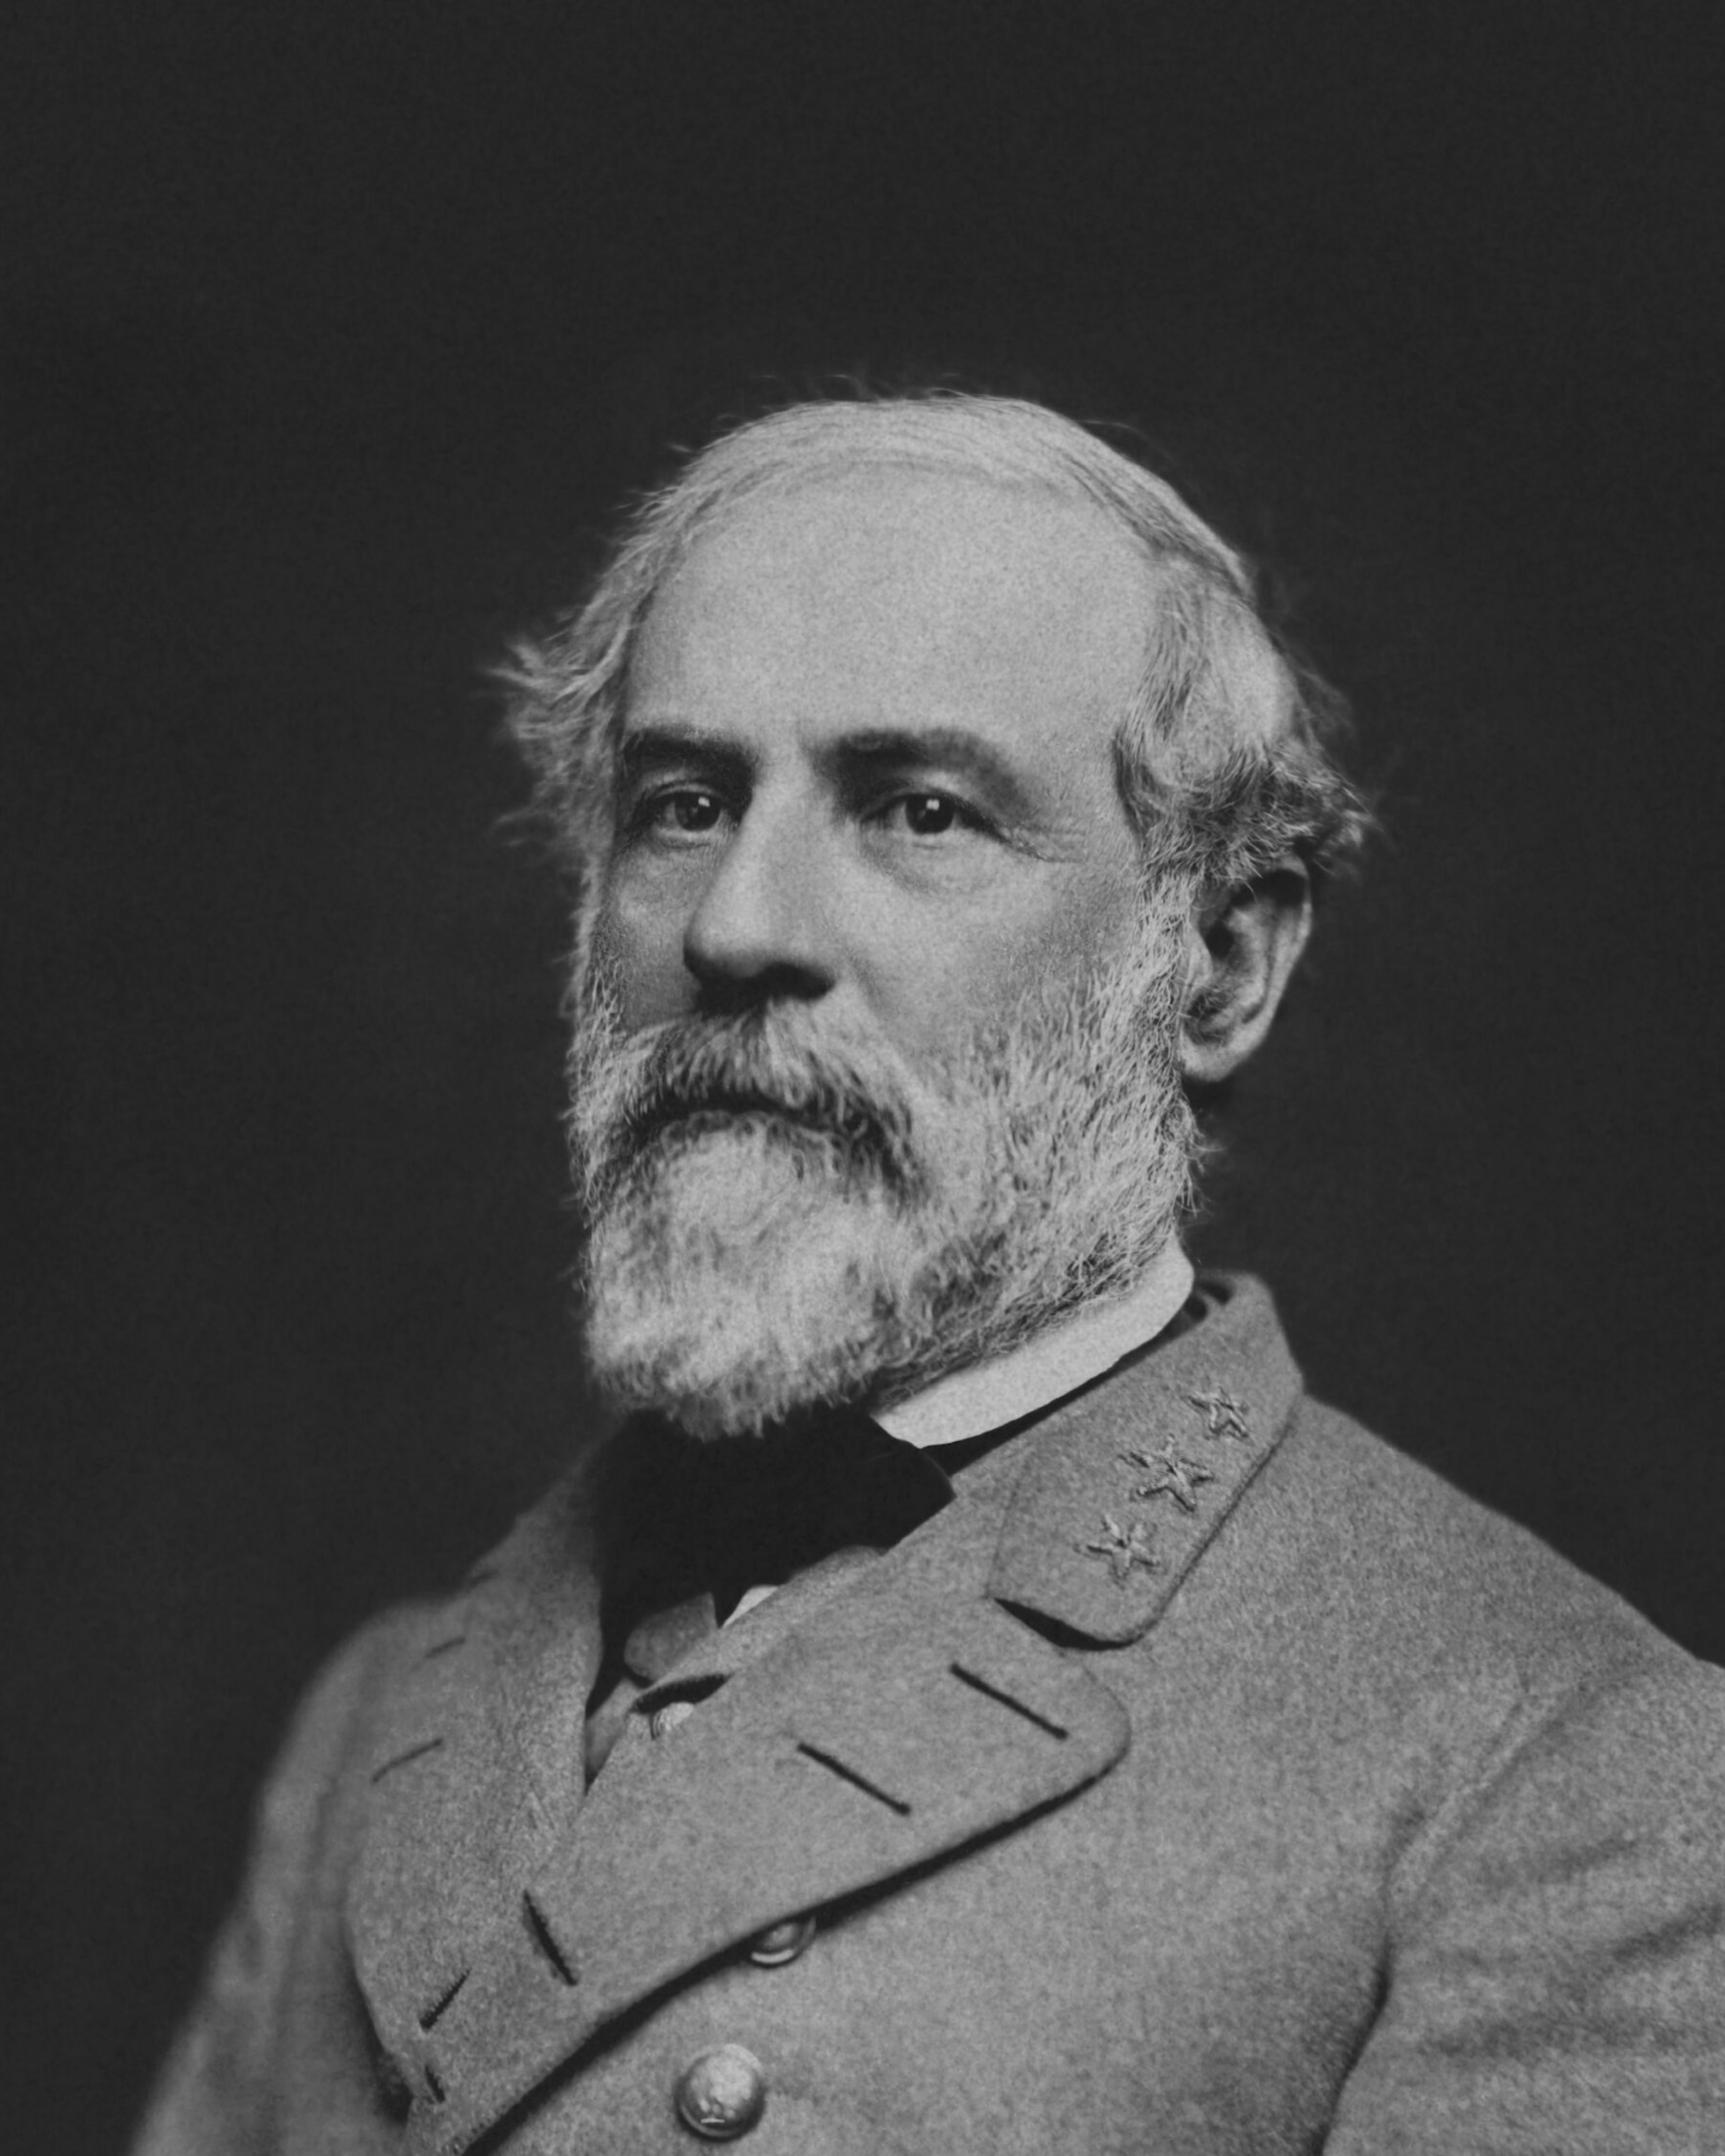 Vintage Civil War photo of Confederate Civil War General Robert E. Lee.